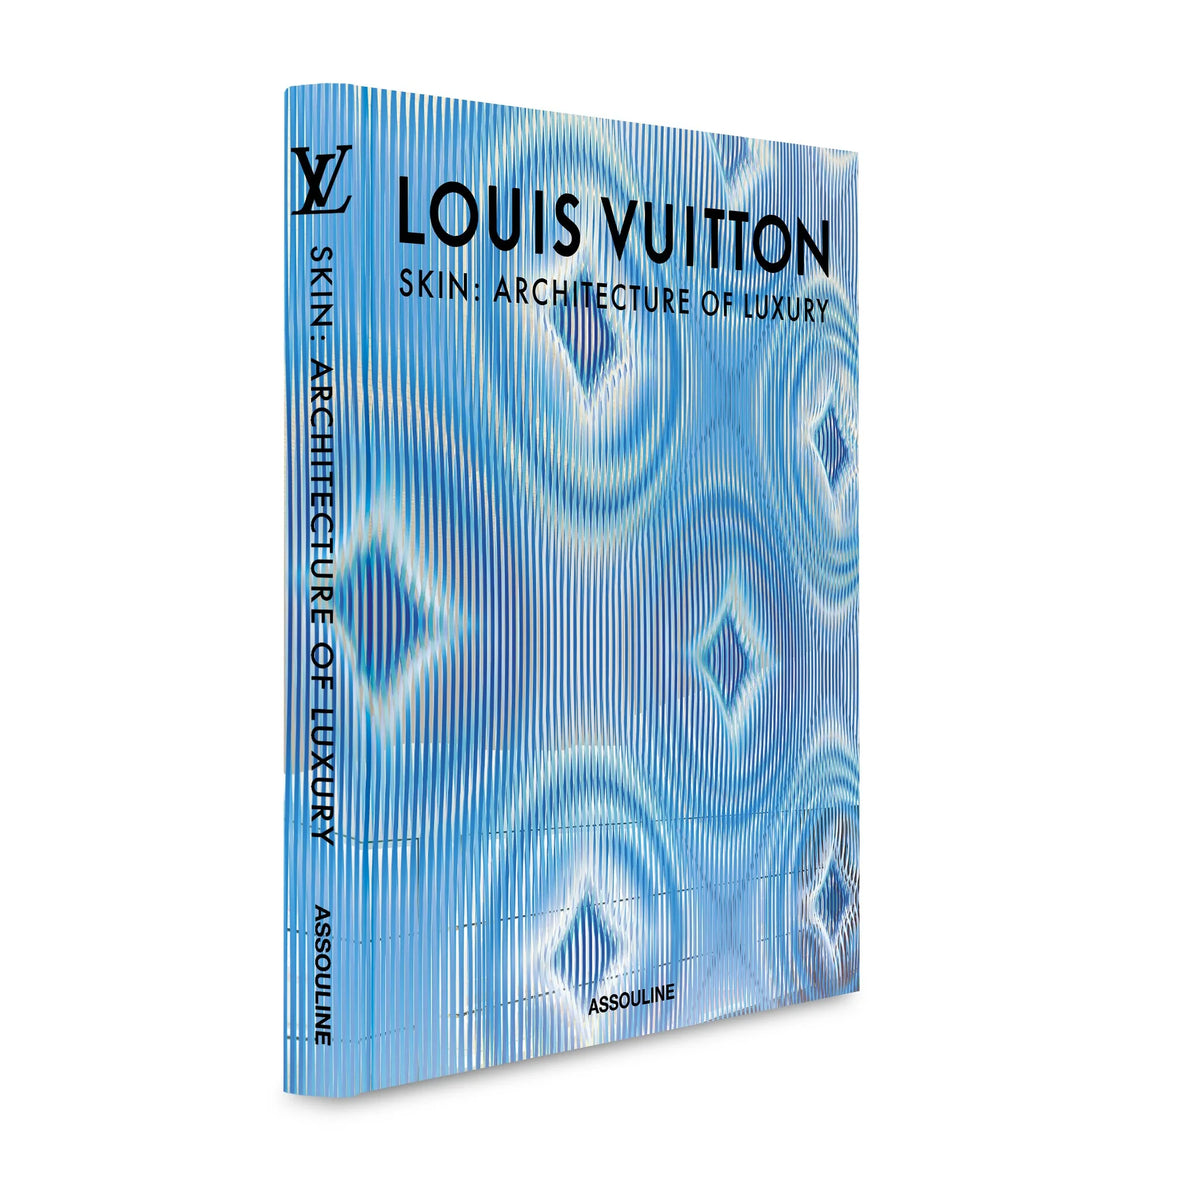 ASSOULINE Louis Vuitton: Virgil Abloh (Classic Cartoon) Hardcover